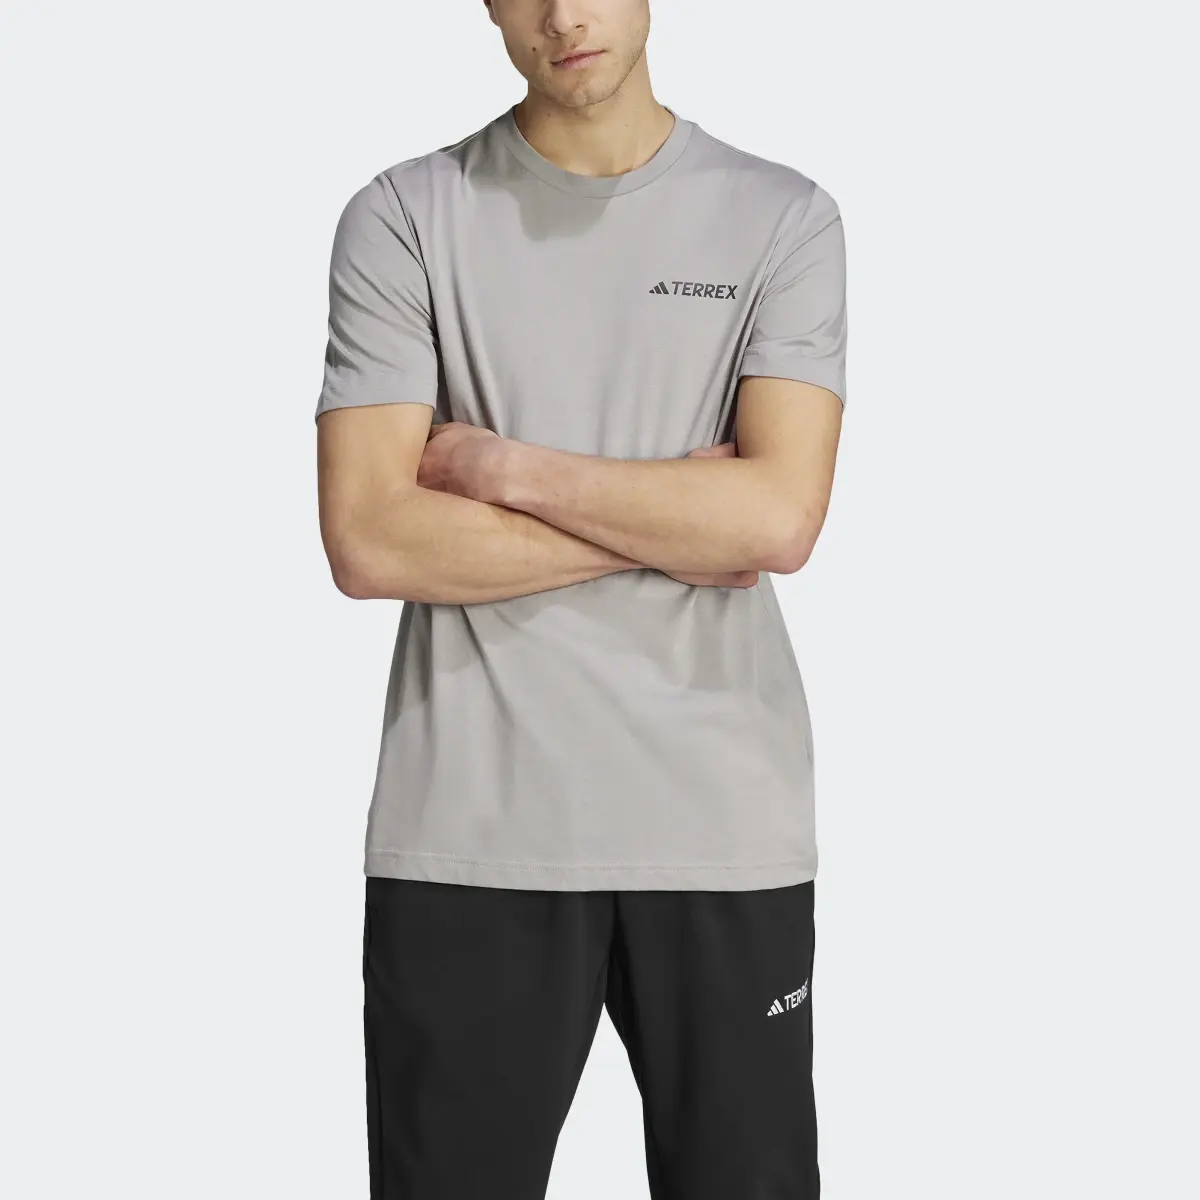 Adidas T-shirt MTN 2.0 TERREX. 1